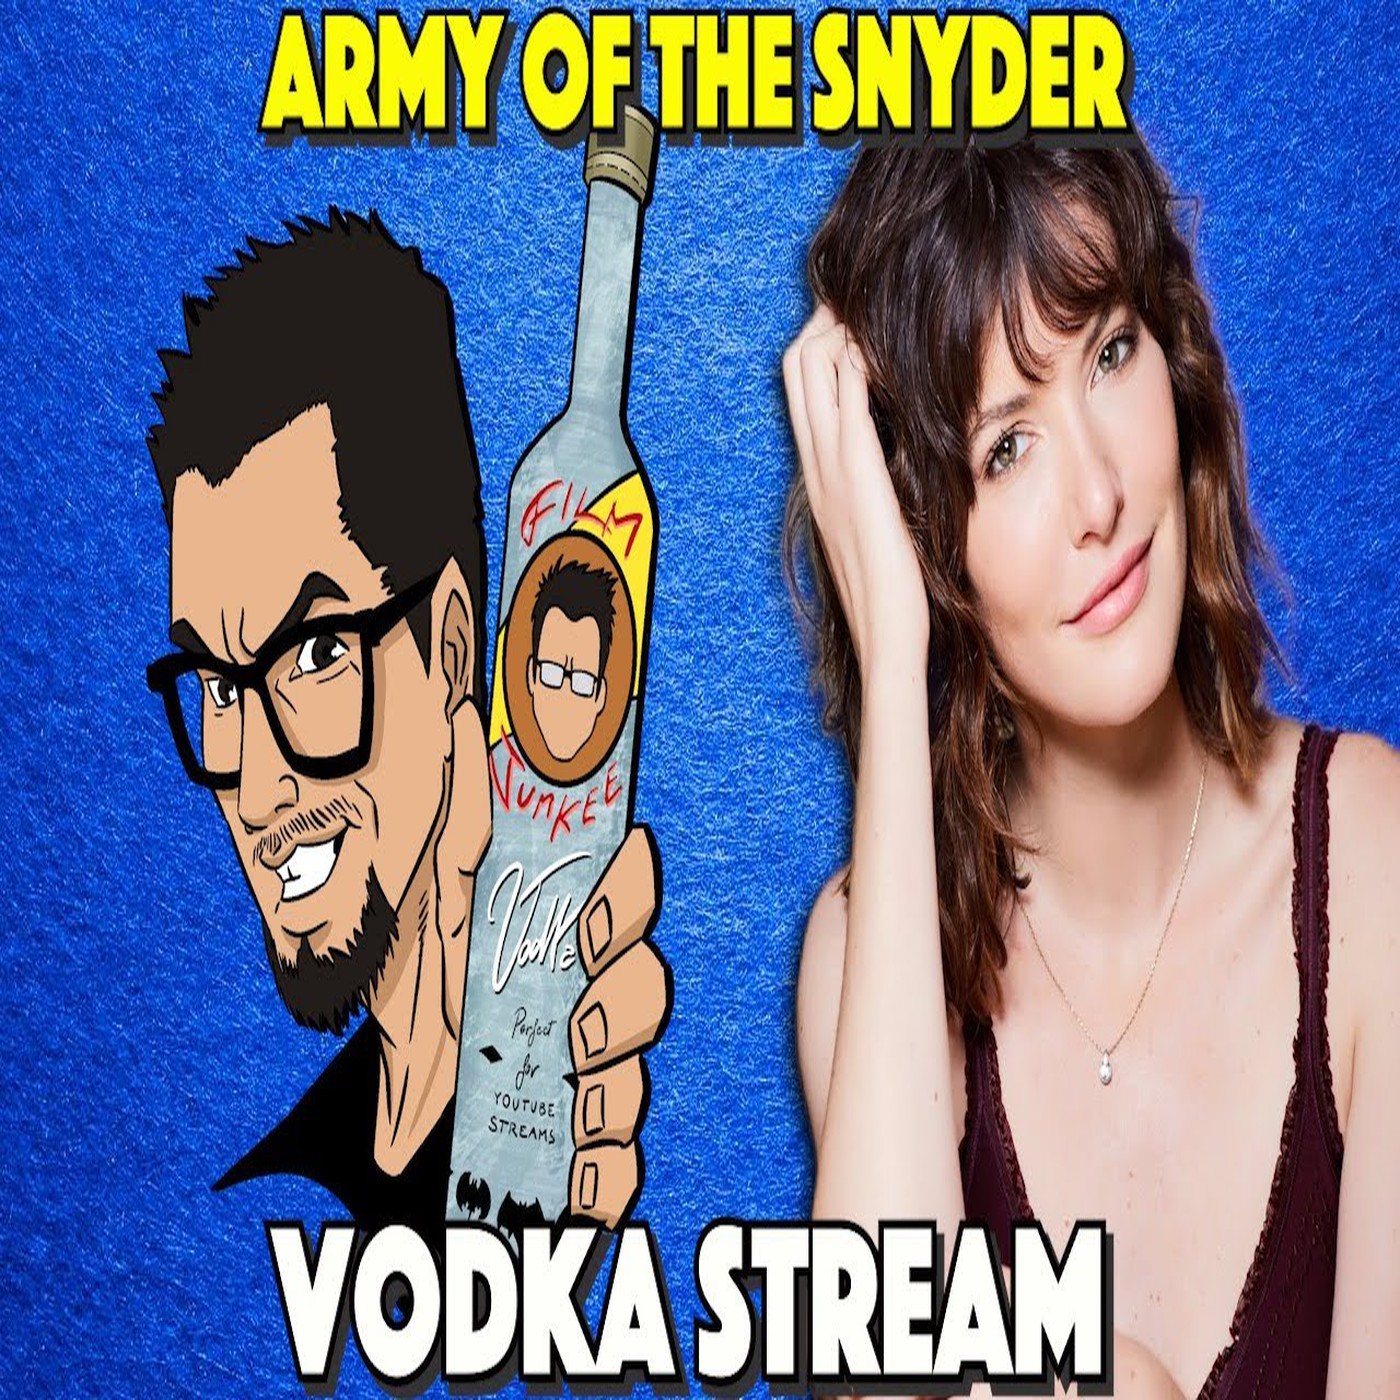 The Vodka Stream